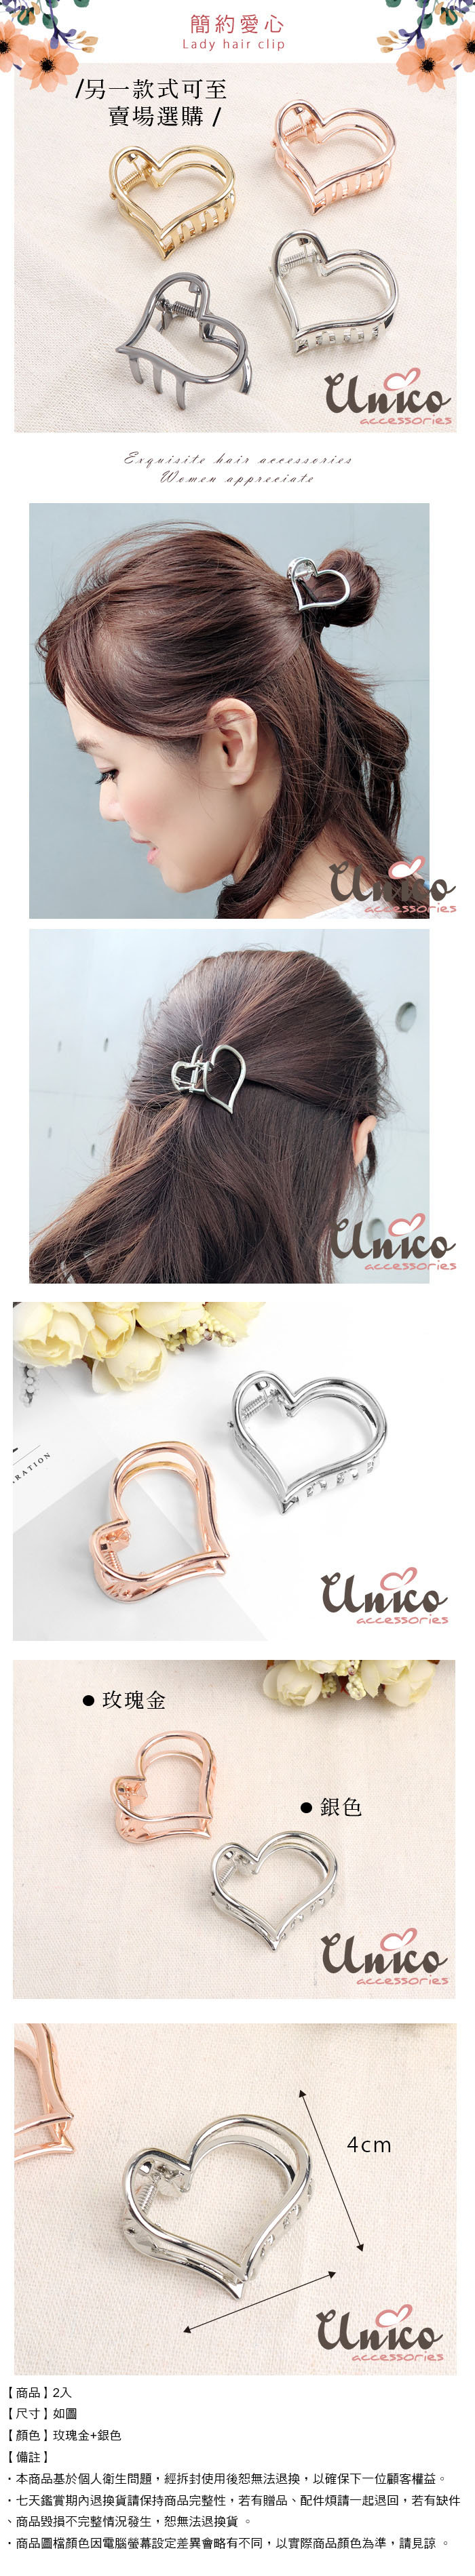 UNICO 簡約時尚質感金屬小號盤髮夾/髮飾-2入(銀+玫瑰金)